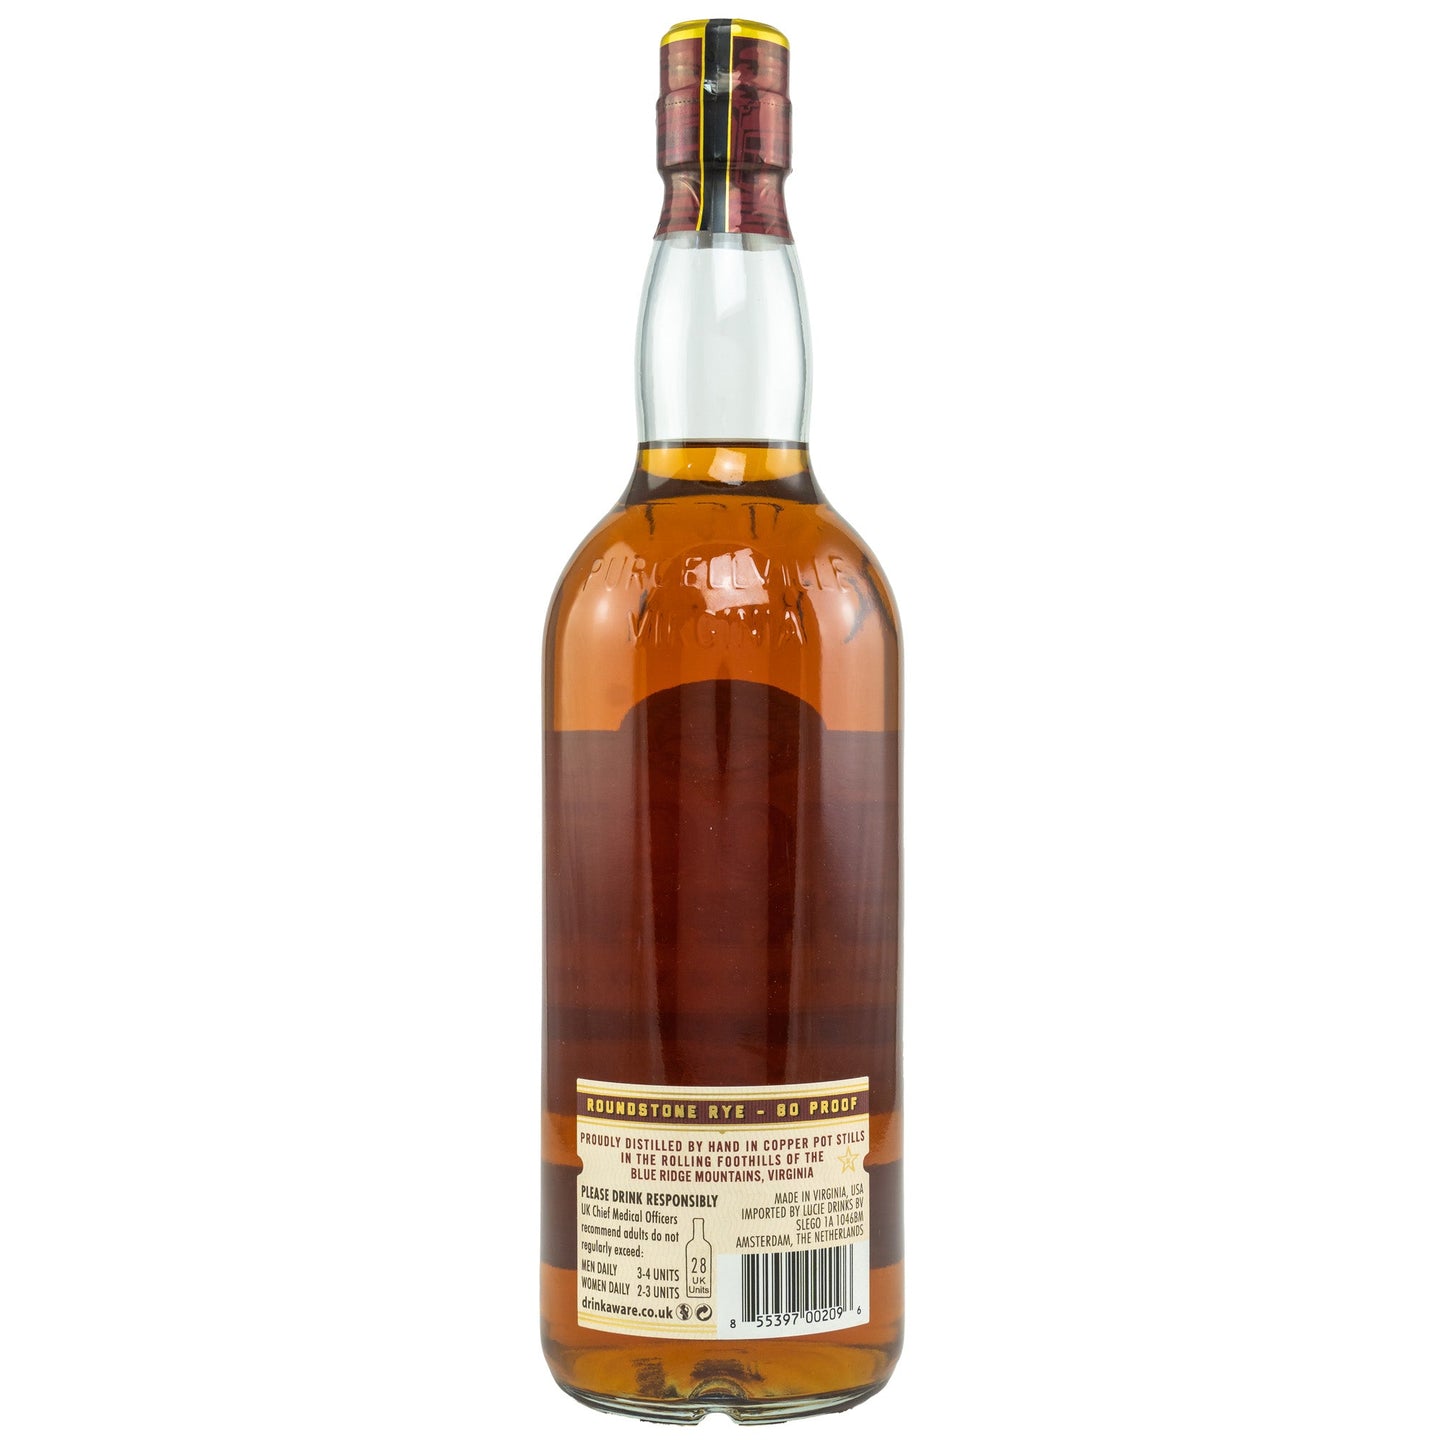 Catoctin Creek | Roundstone Rye | Single Barrel | Virginia Rye Whisky | 0,7l | 40%GET A BOTTLE